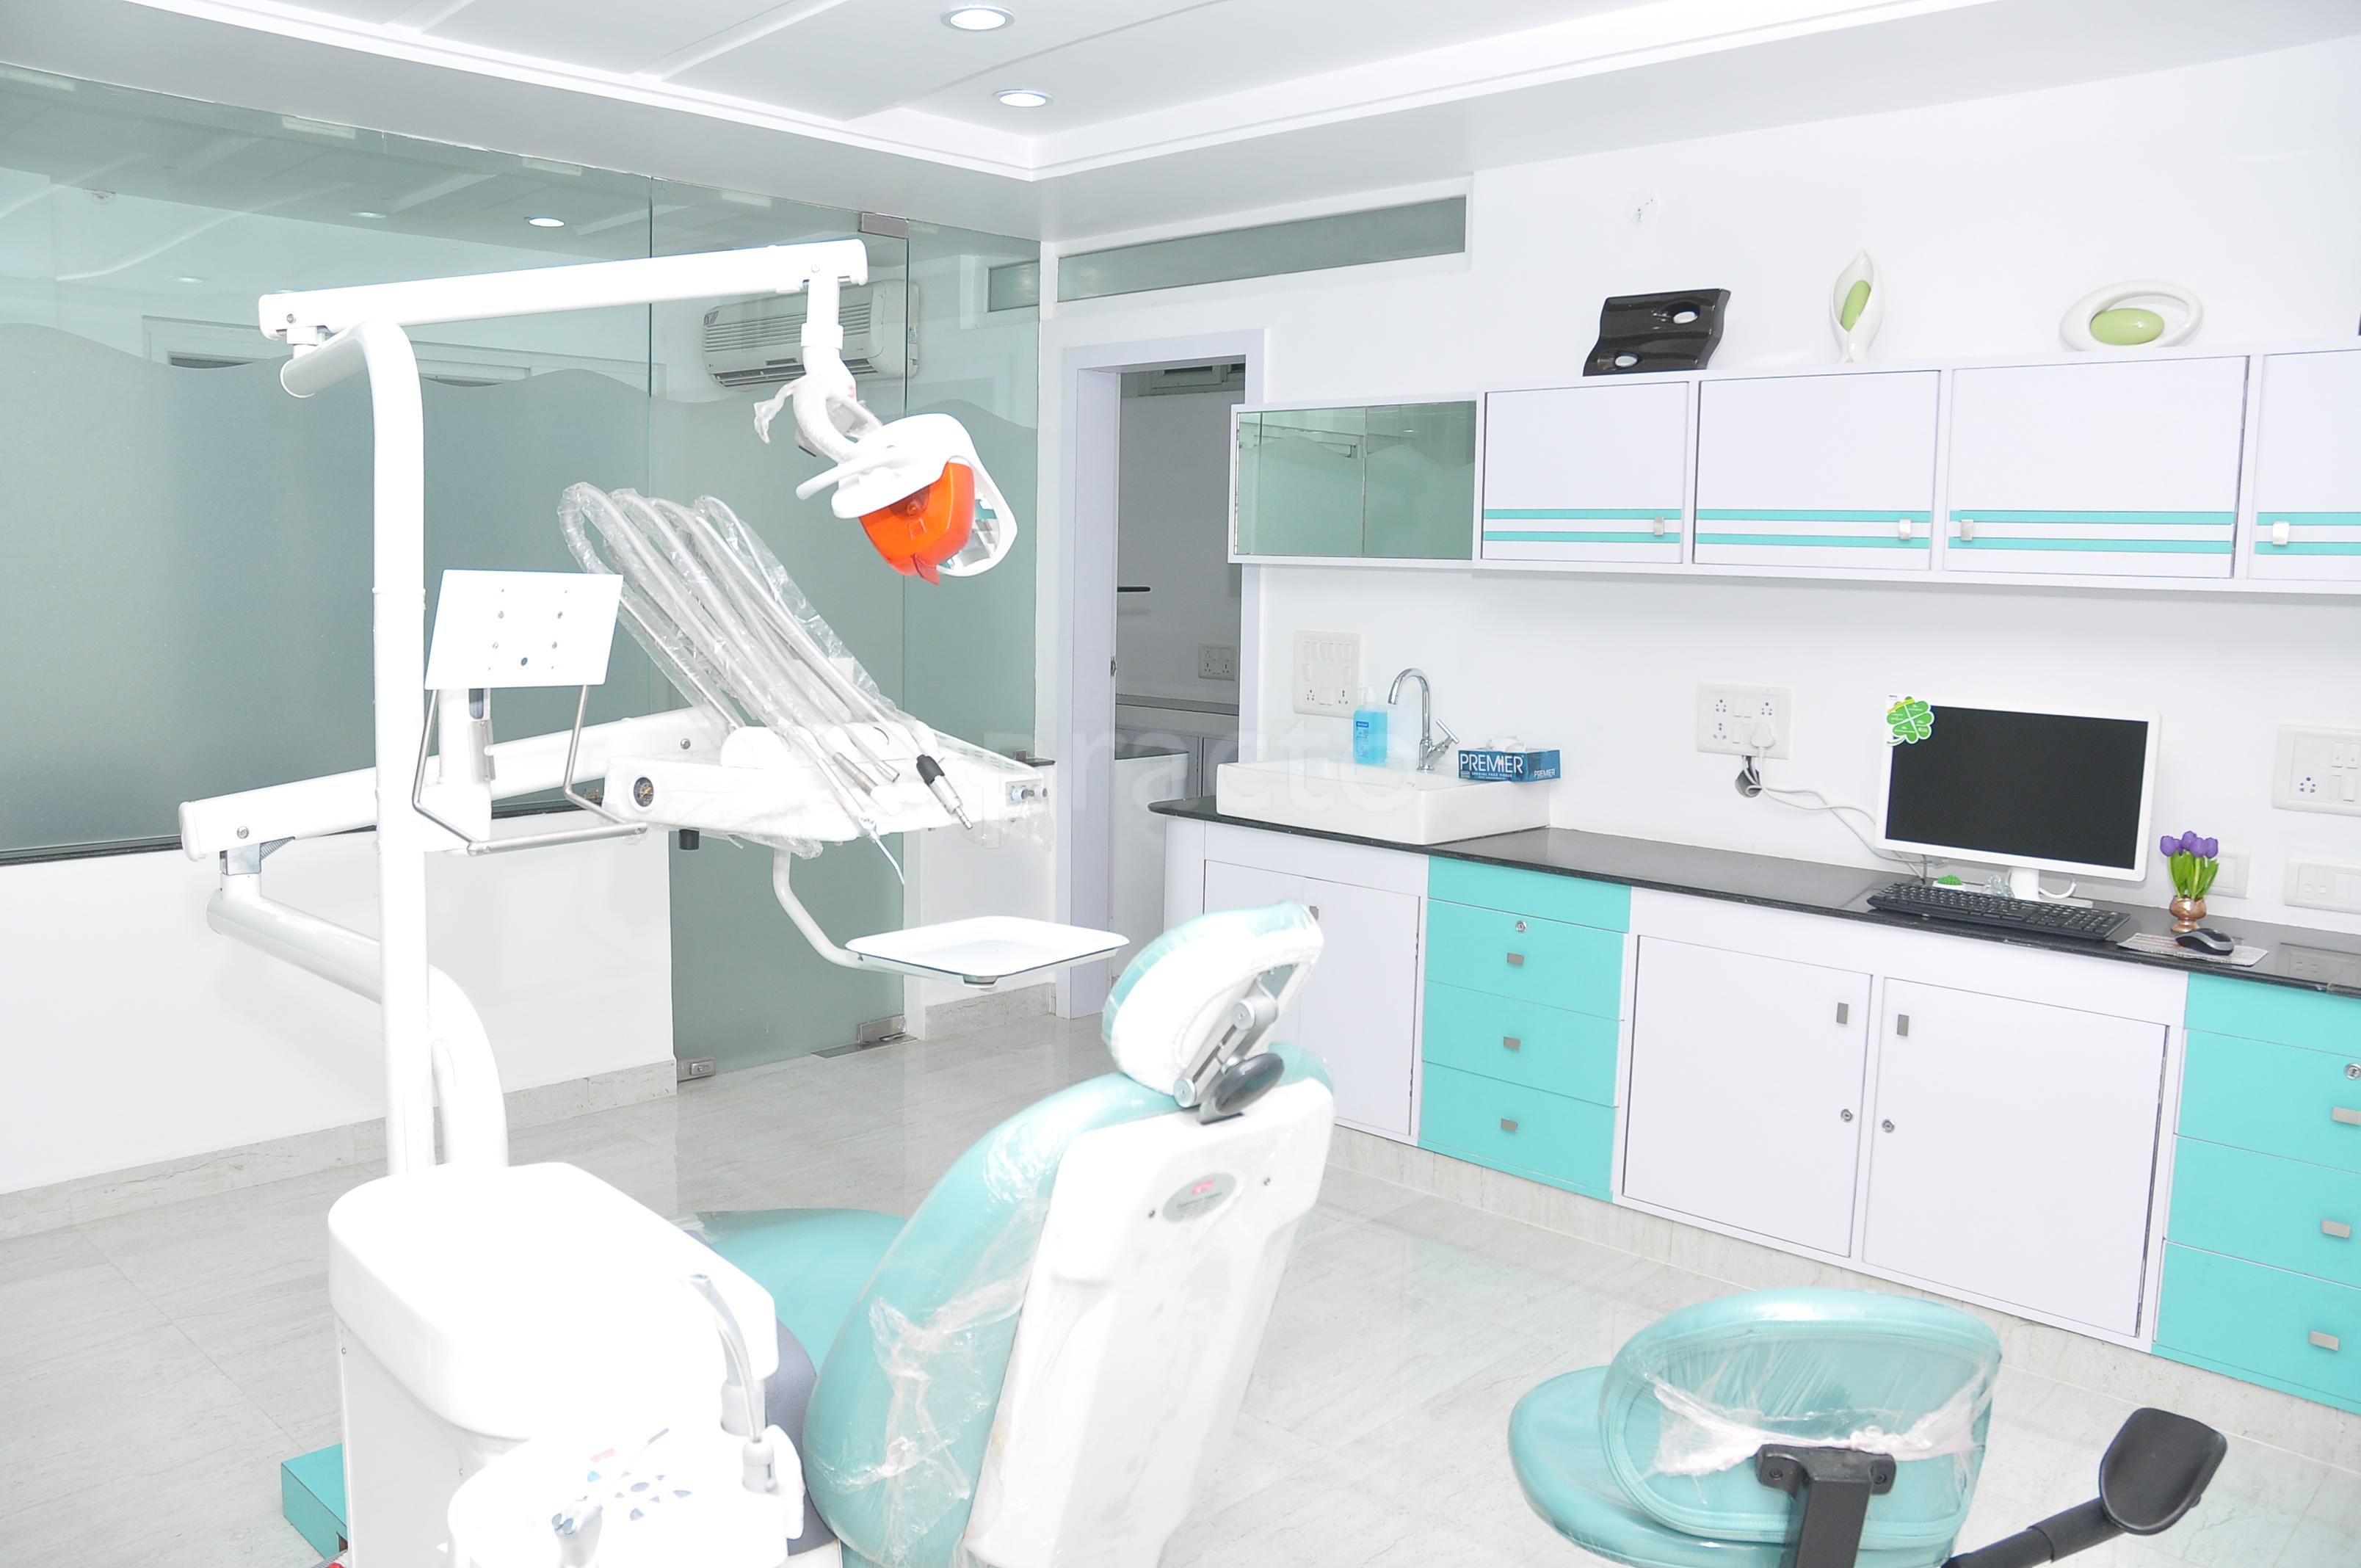 jaws dental clinic implant centre chennai 1459252952 56fa6ed89e0fb - ارتودنسى؛در كلينيك دندانپزشكى يا مطب ارتودنسى